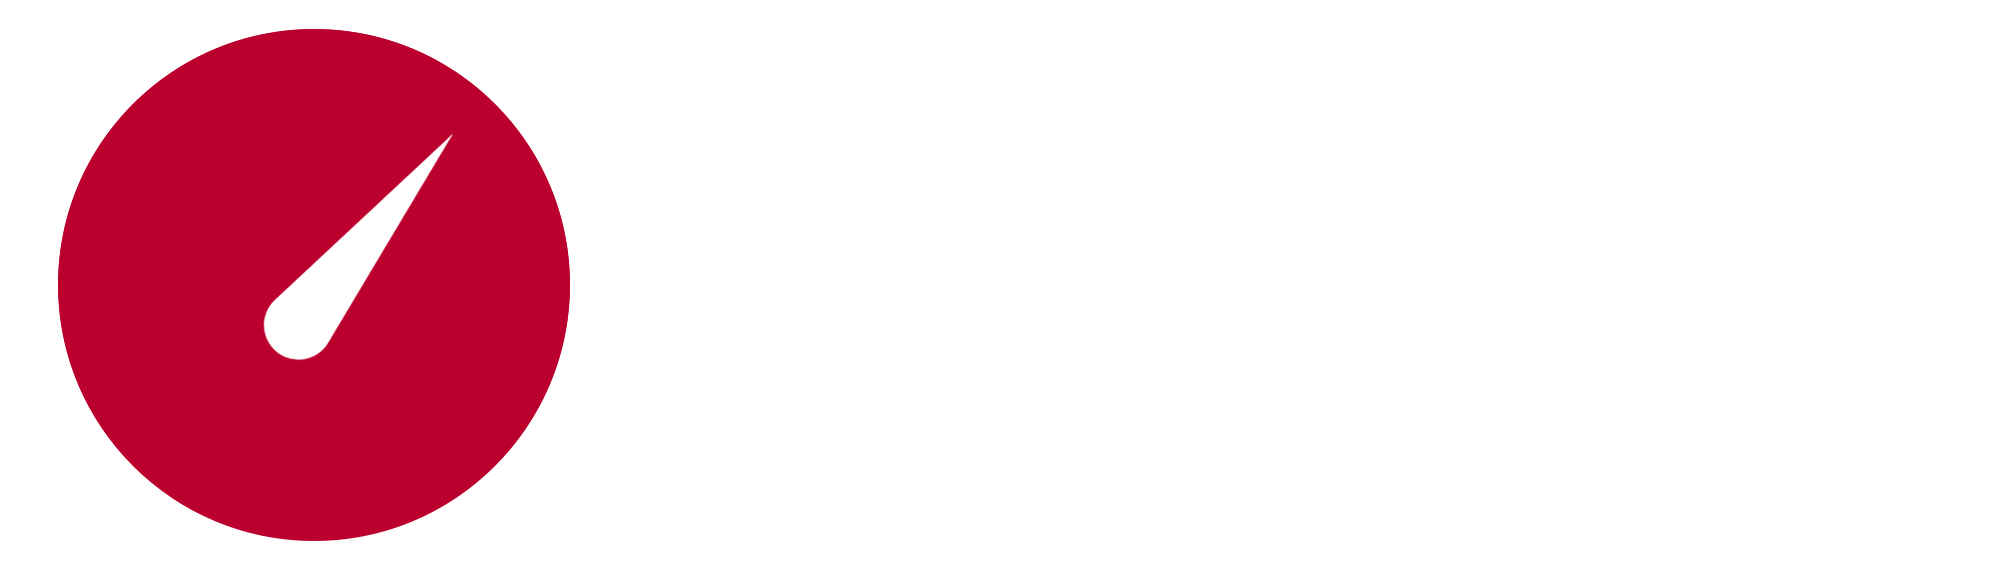 Stanford Japan Barometer